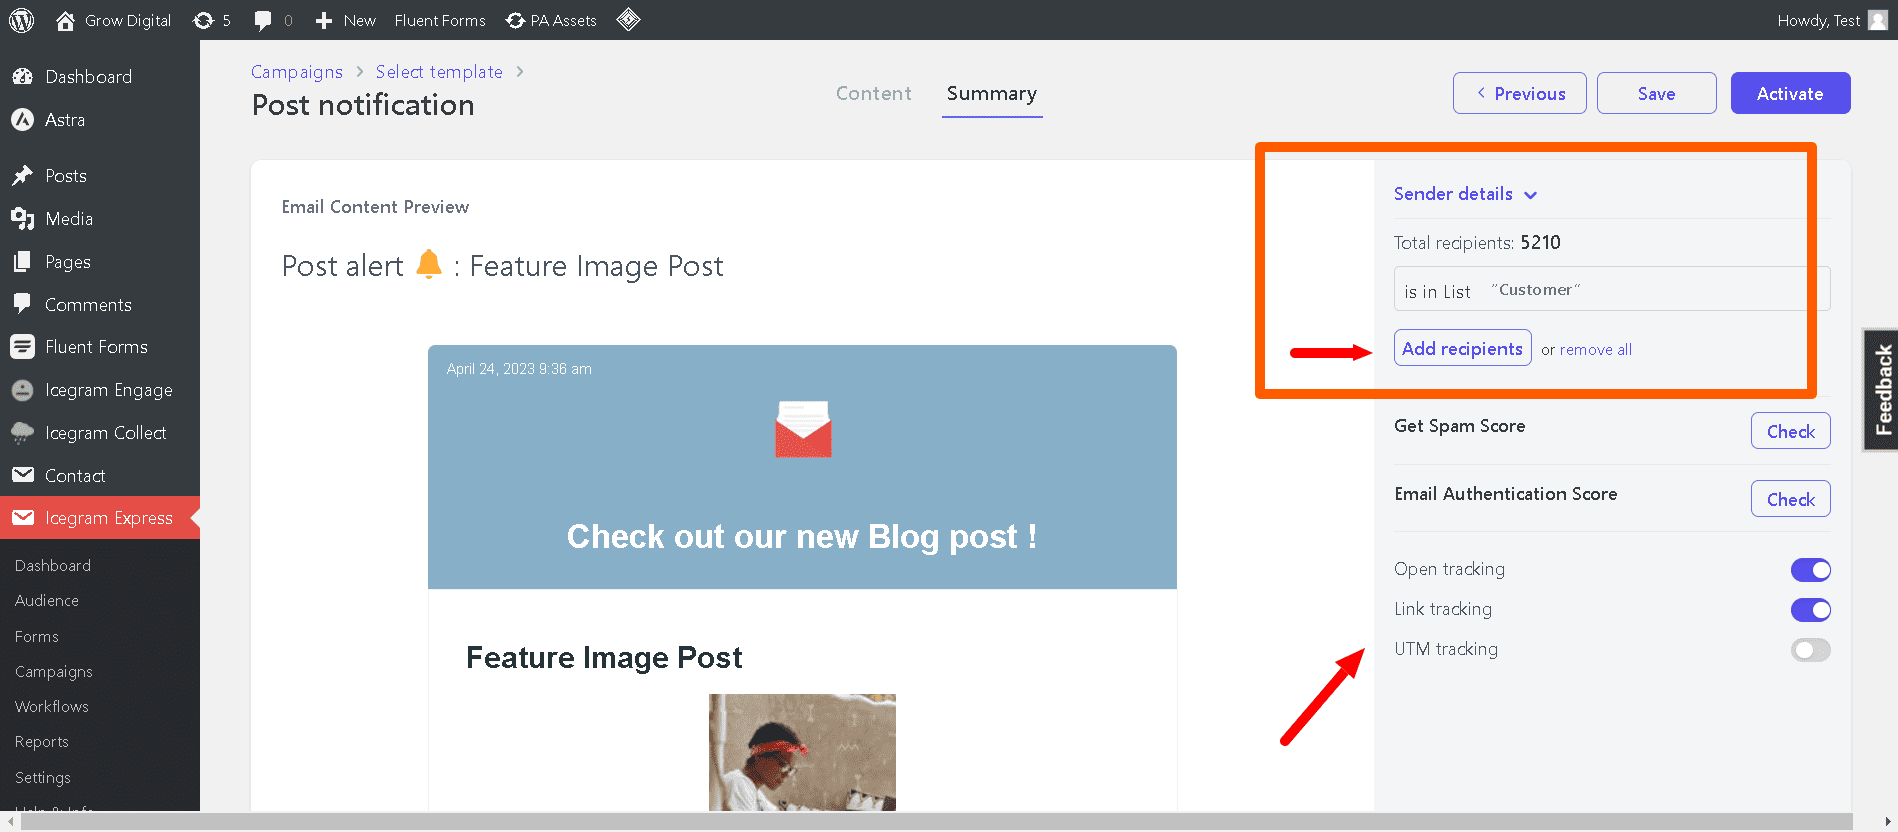 Post Notifications Grow Digital WordPress